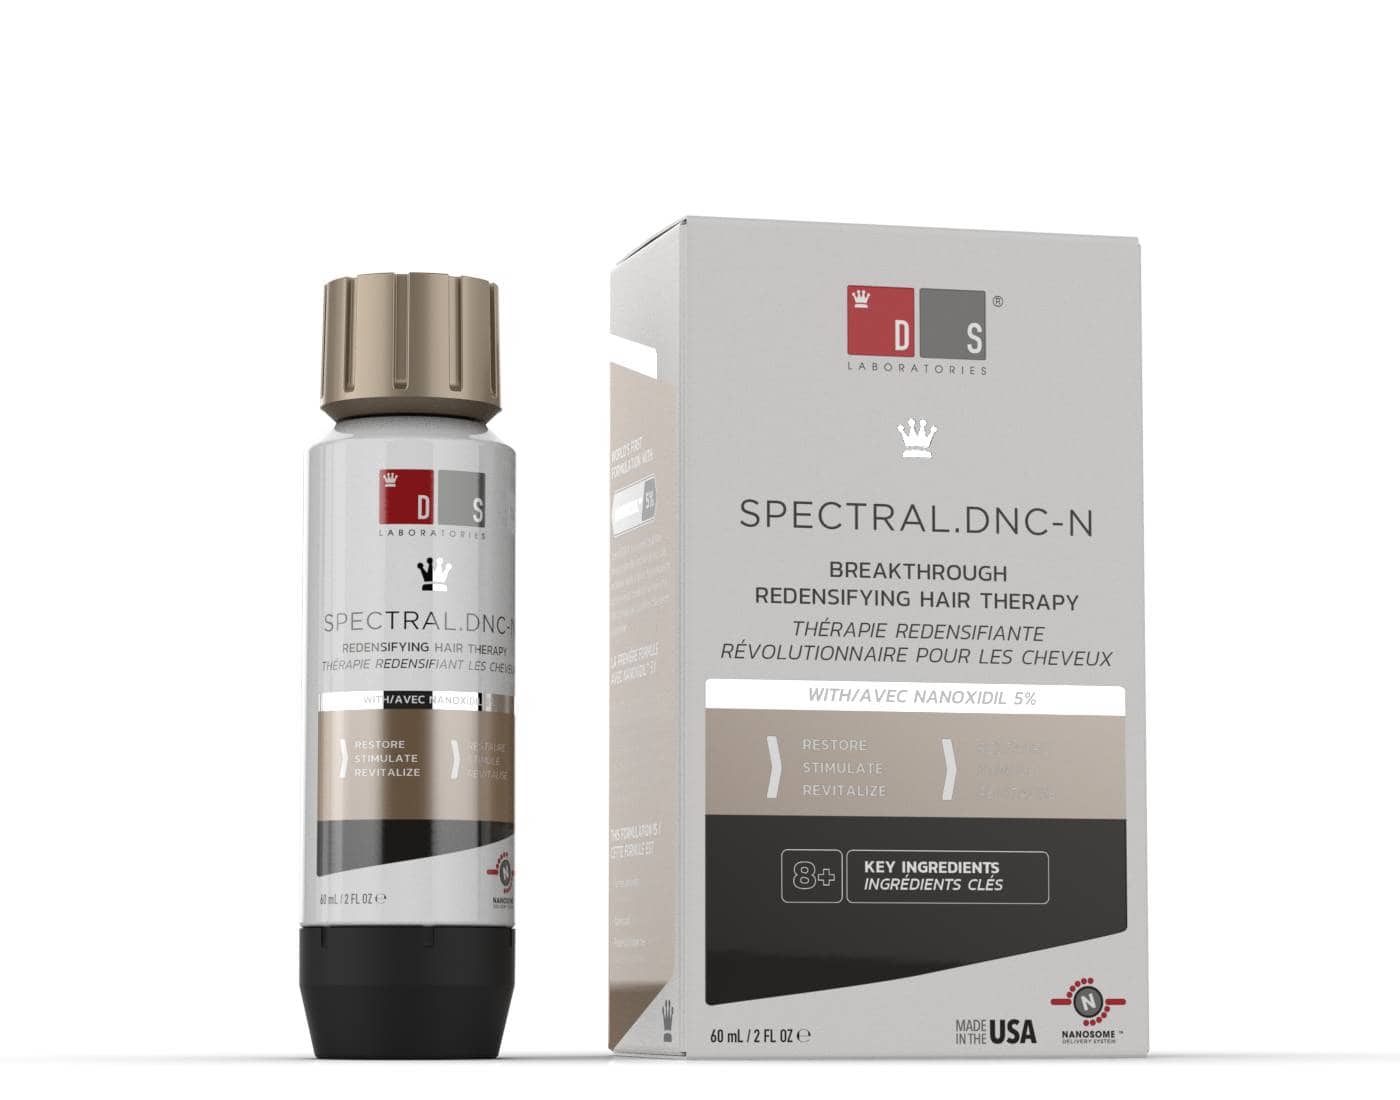 SPECTRAL.DNC-N® | Bahnbrechende Behandlung gegen Haarausfall mit Nanoxidil® 5%